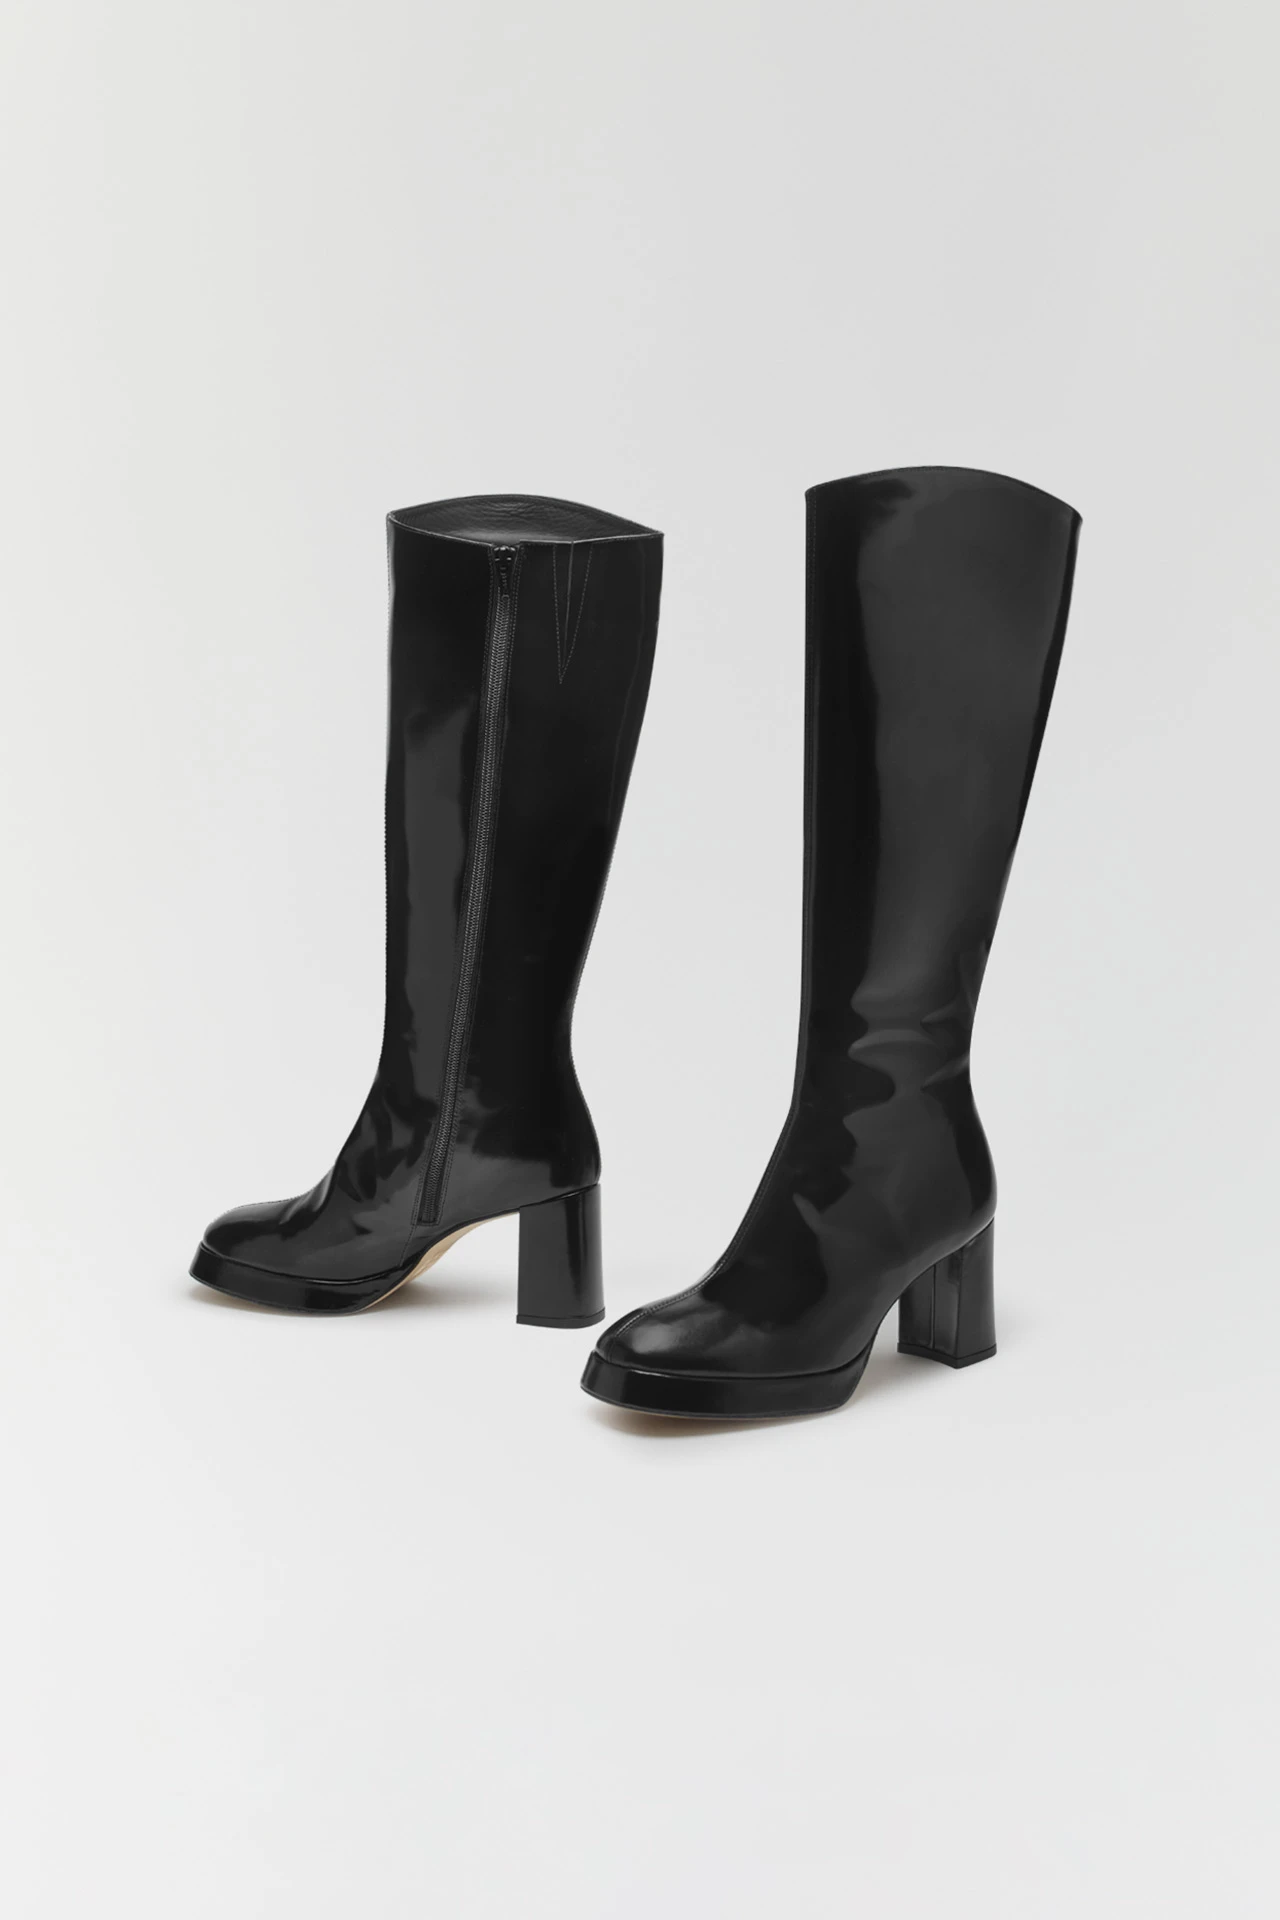 miista-eirlys-black-florentique-boots-2